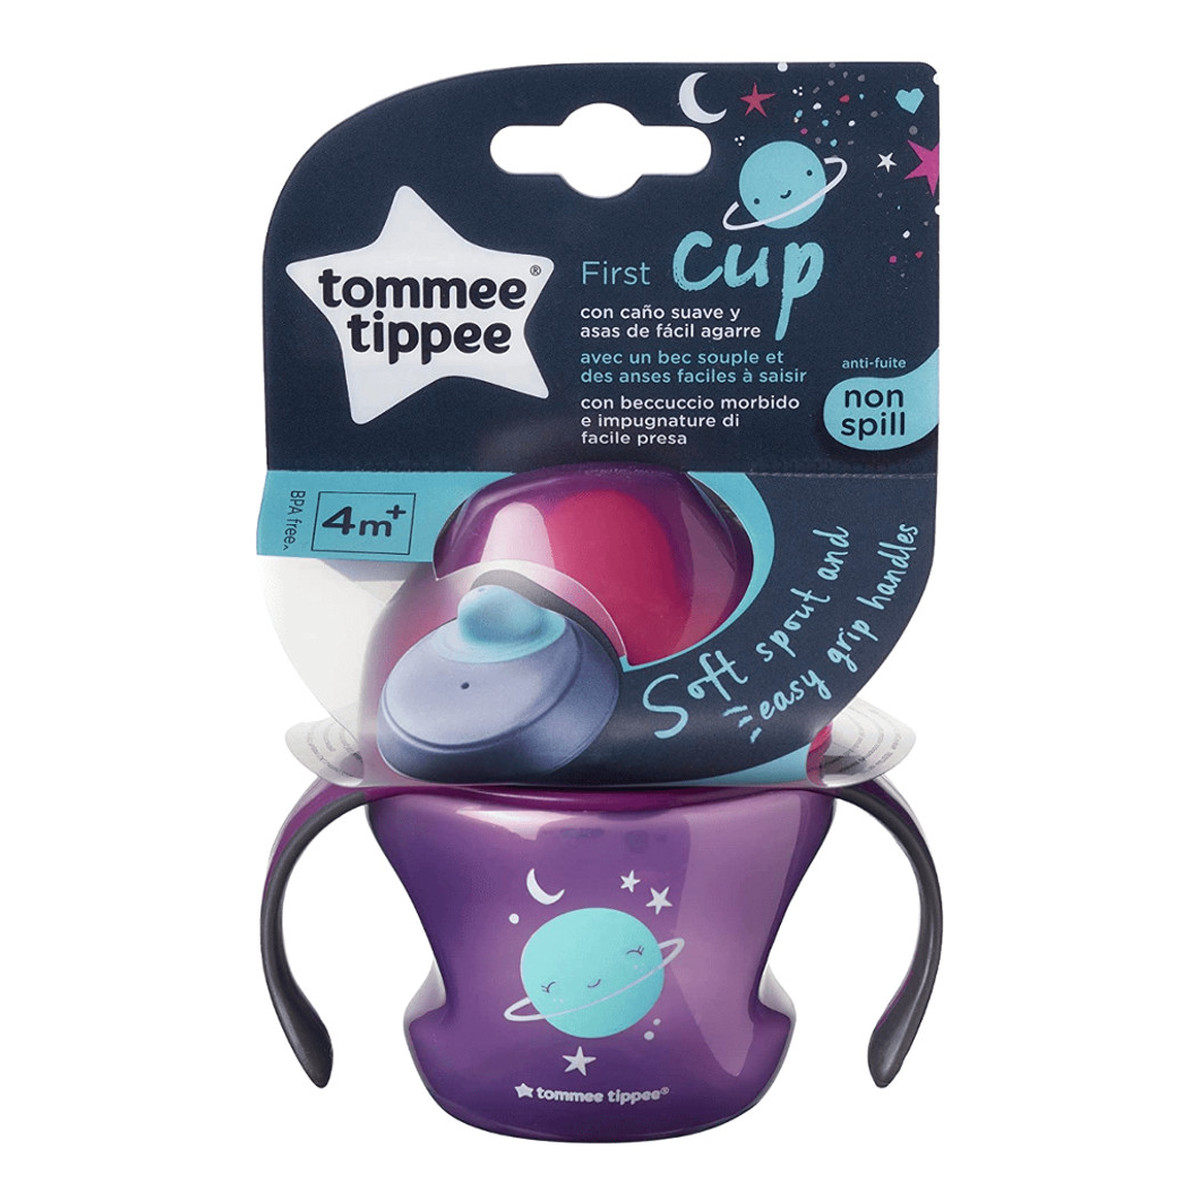 Tommee Tippee First cup pierwszy kubek z uchwytami 4m+ fioletowy 150ml